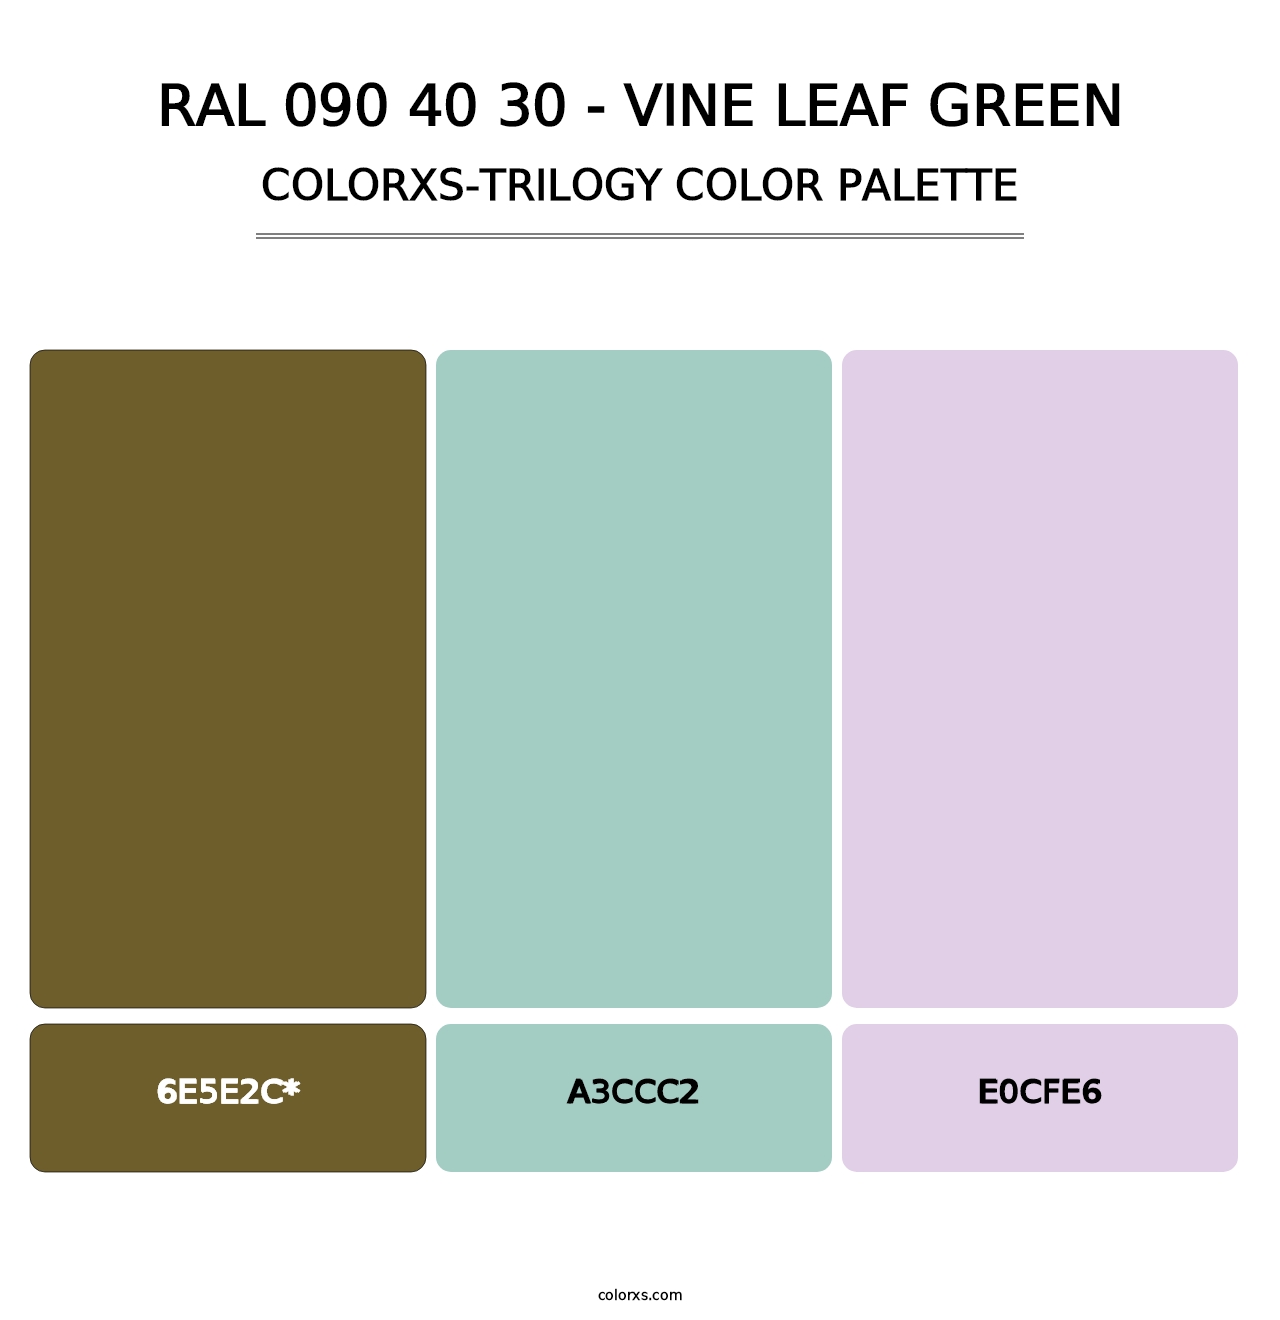 RAL 090 40 30 - Vine Leaf Green - Colorxs Trilogy Palette